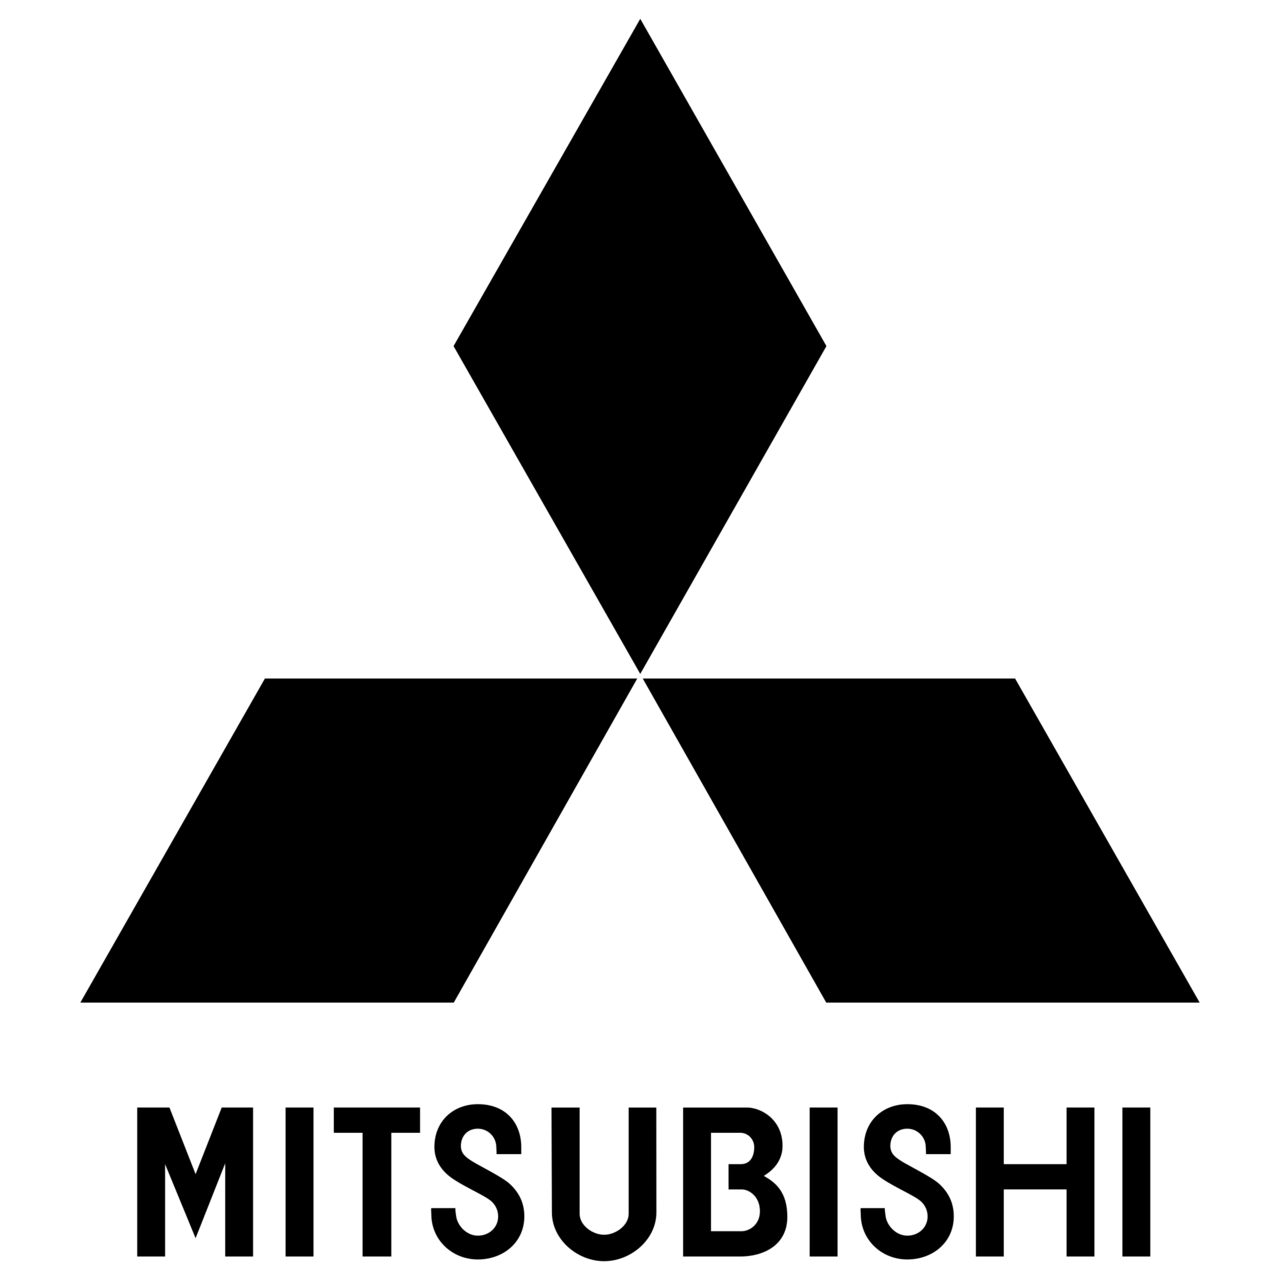 mitsubishi-logo-black-and-white-1